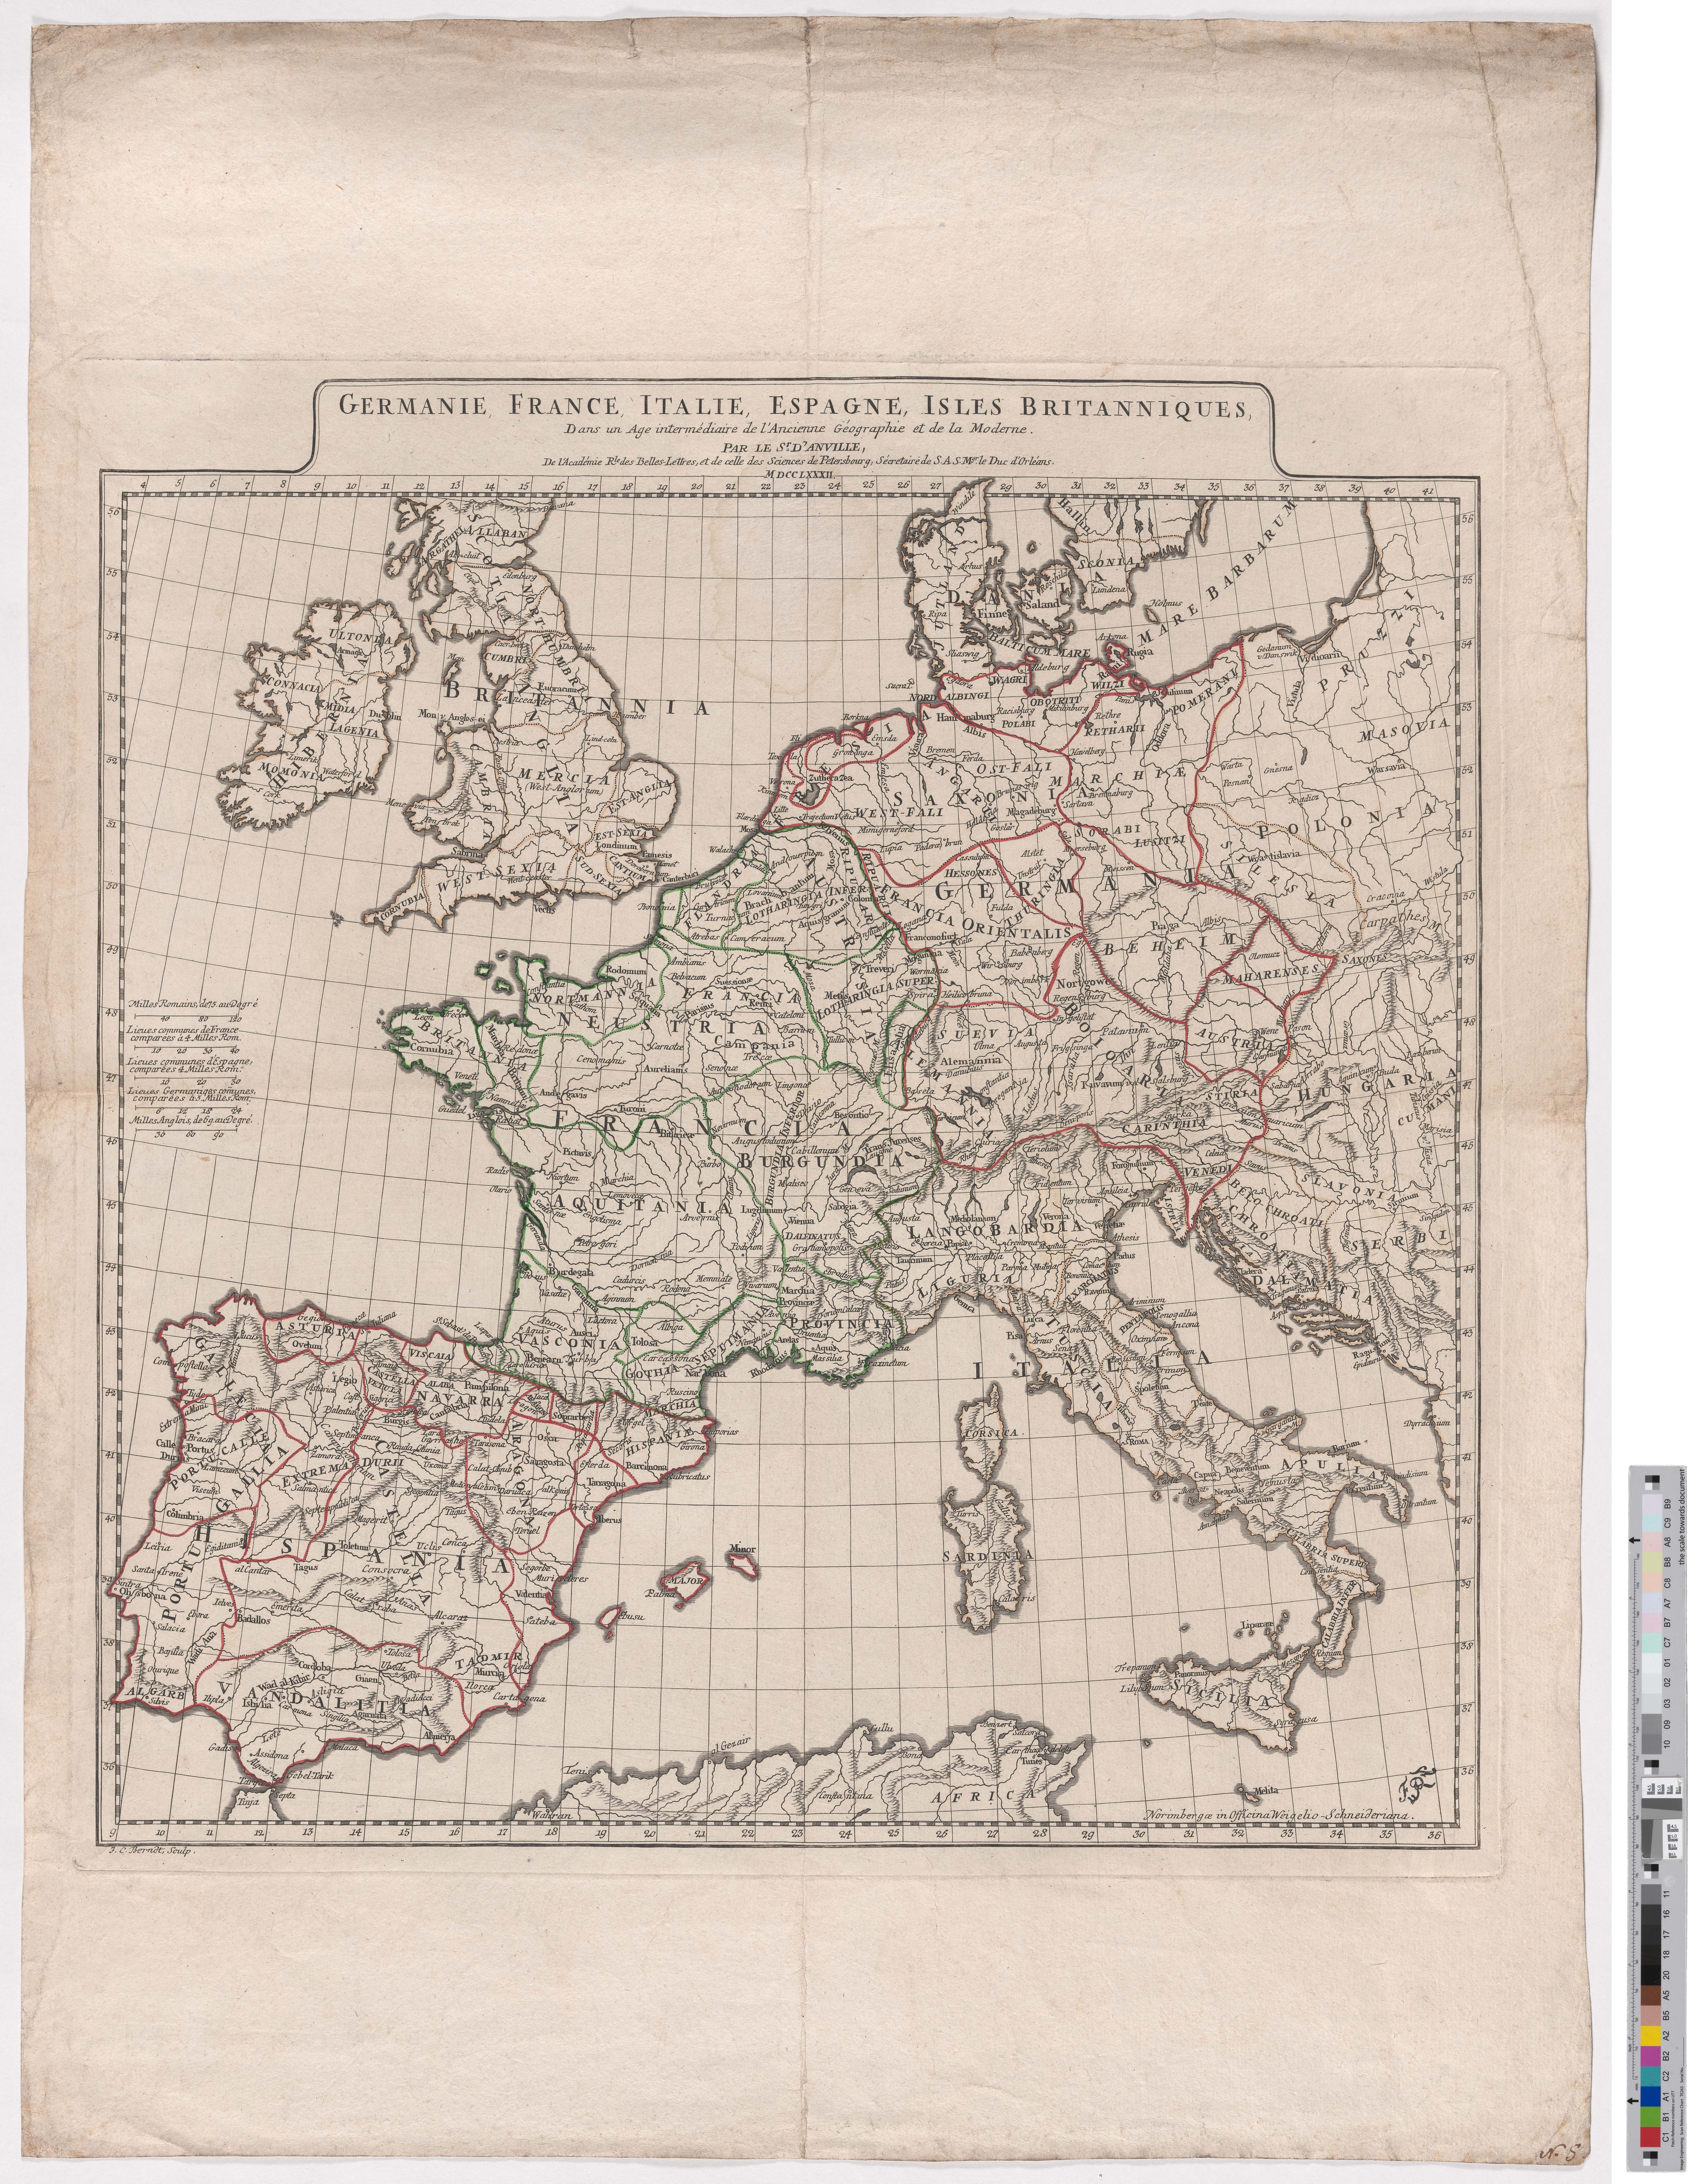 Landkarte "Germanie, France, Italie, Espagne, Isles Britanniques" (Kreismuseum Grimma RR-F)